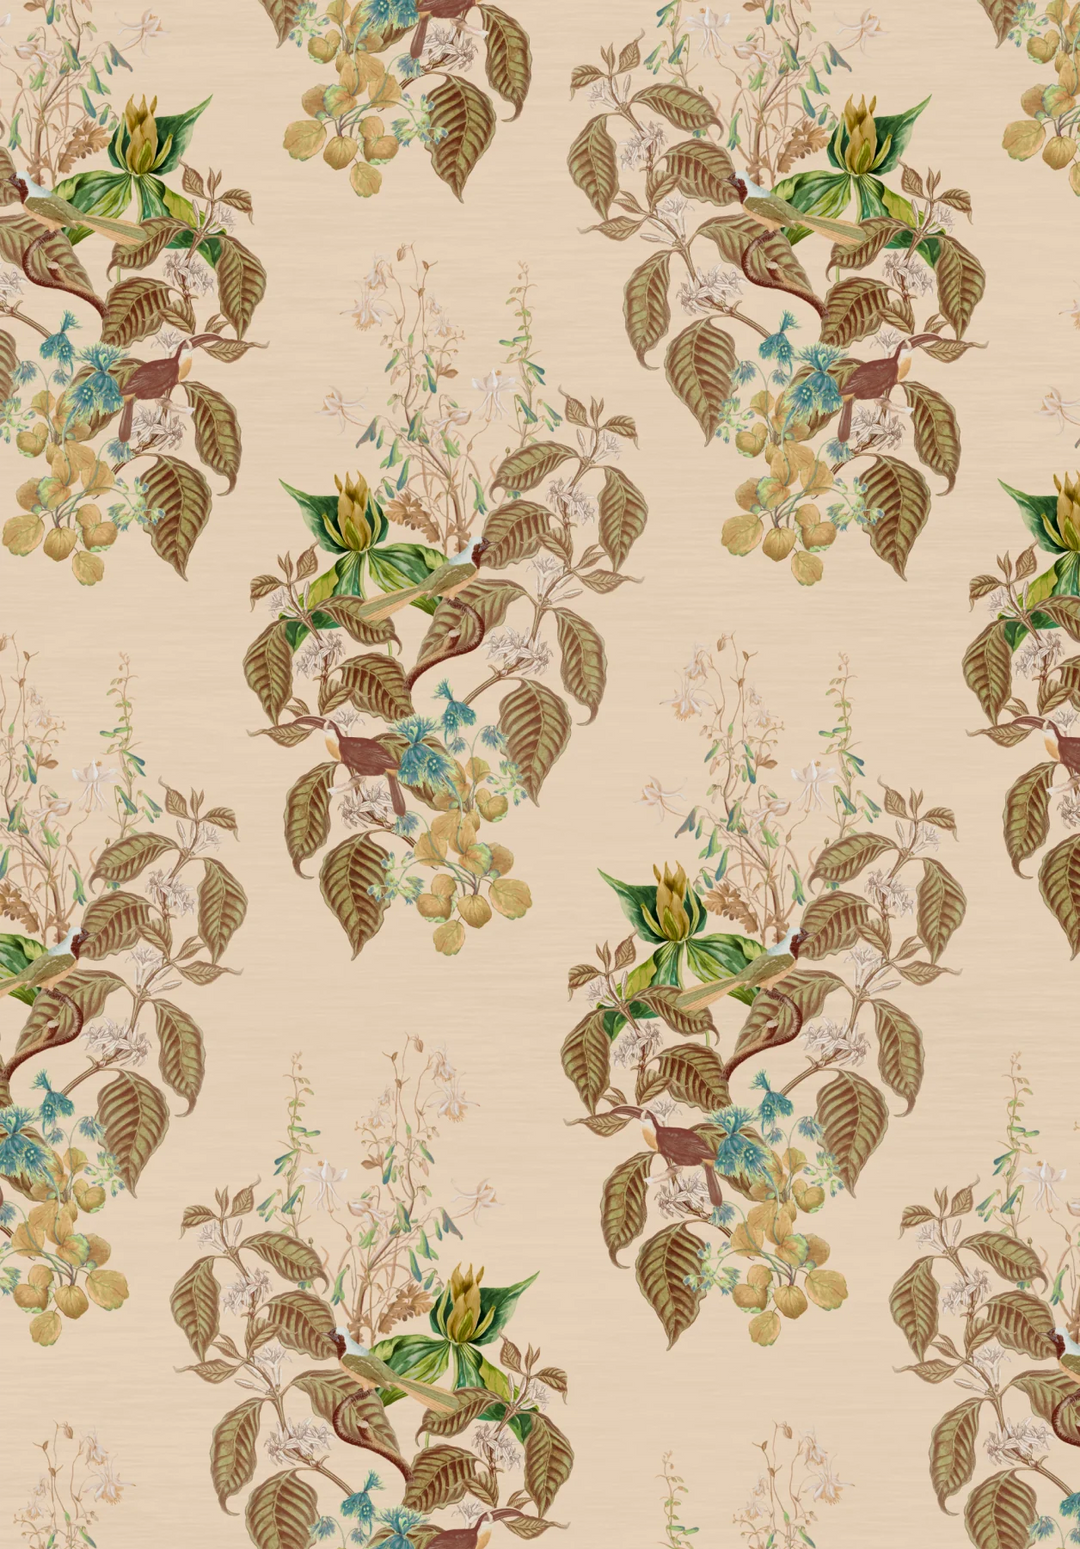 Deus-ex-Gardenia-Aviary-Isle-Ecru-Wallpaper-French-Toile-Design-Jasmine-Birds-Romantic-trailing-pattern-leaves-garden-beige-background